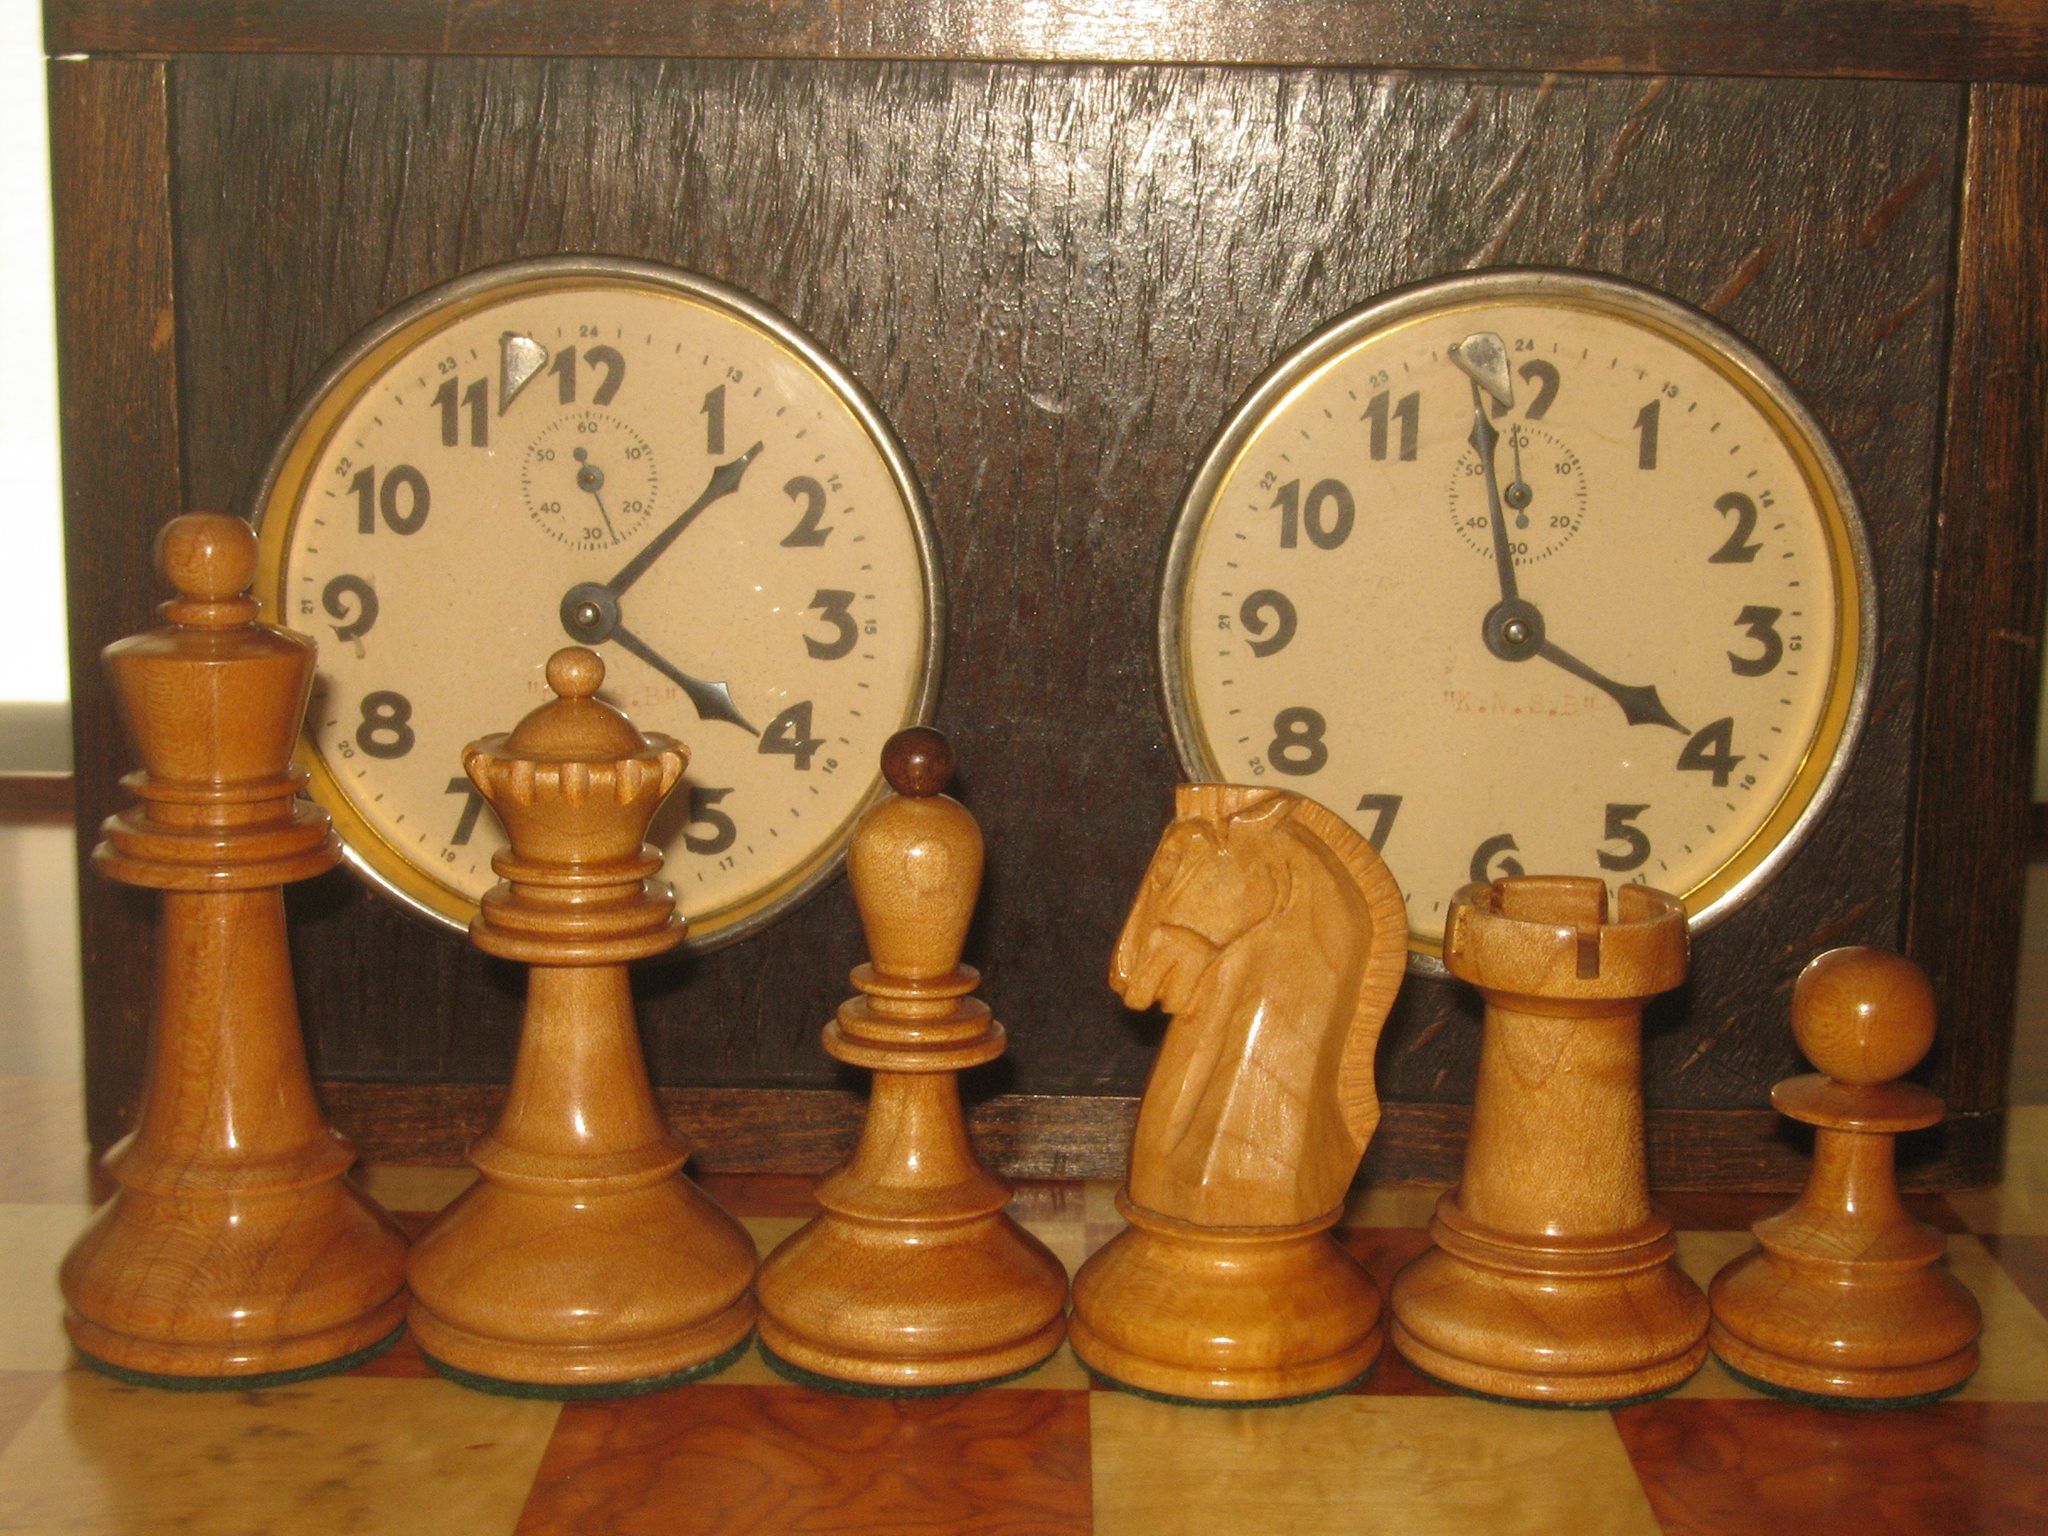 Historical Chess set designs